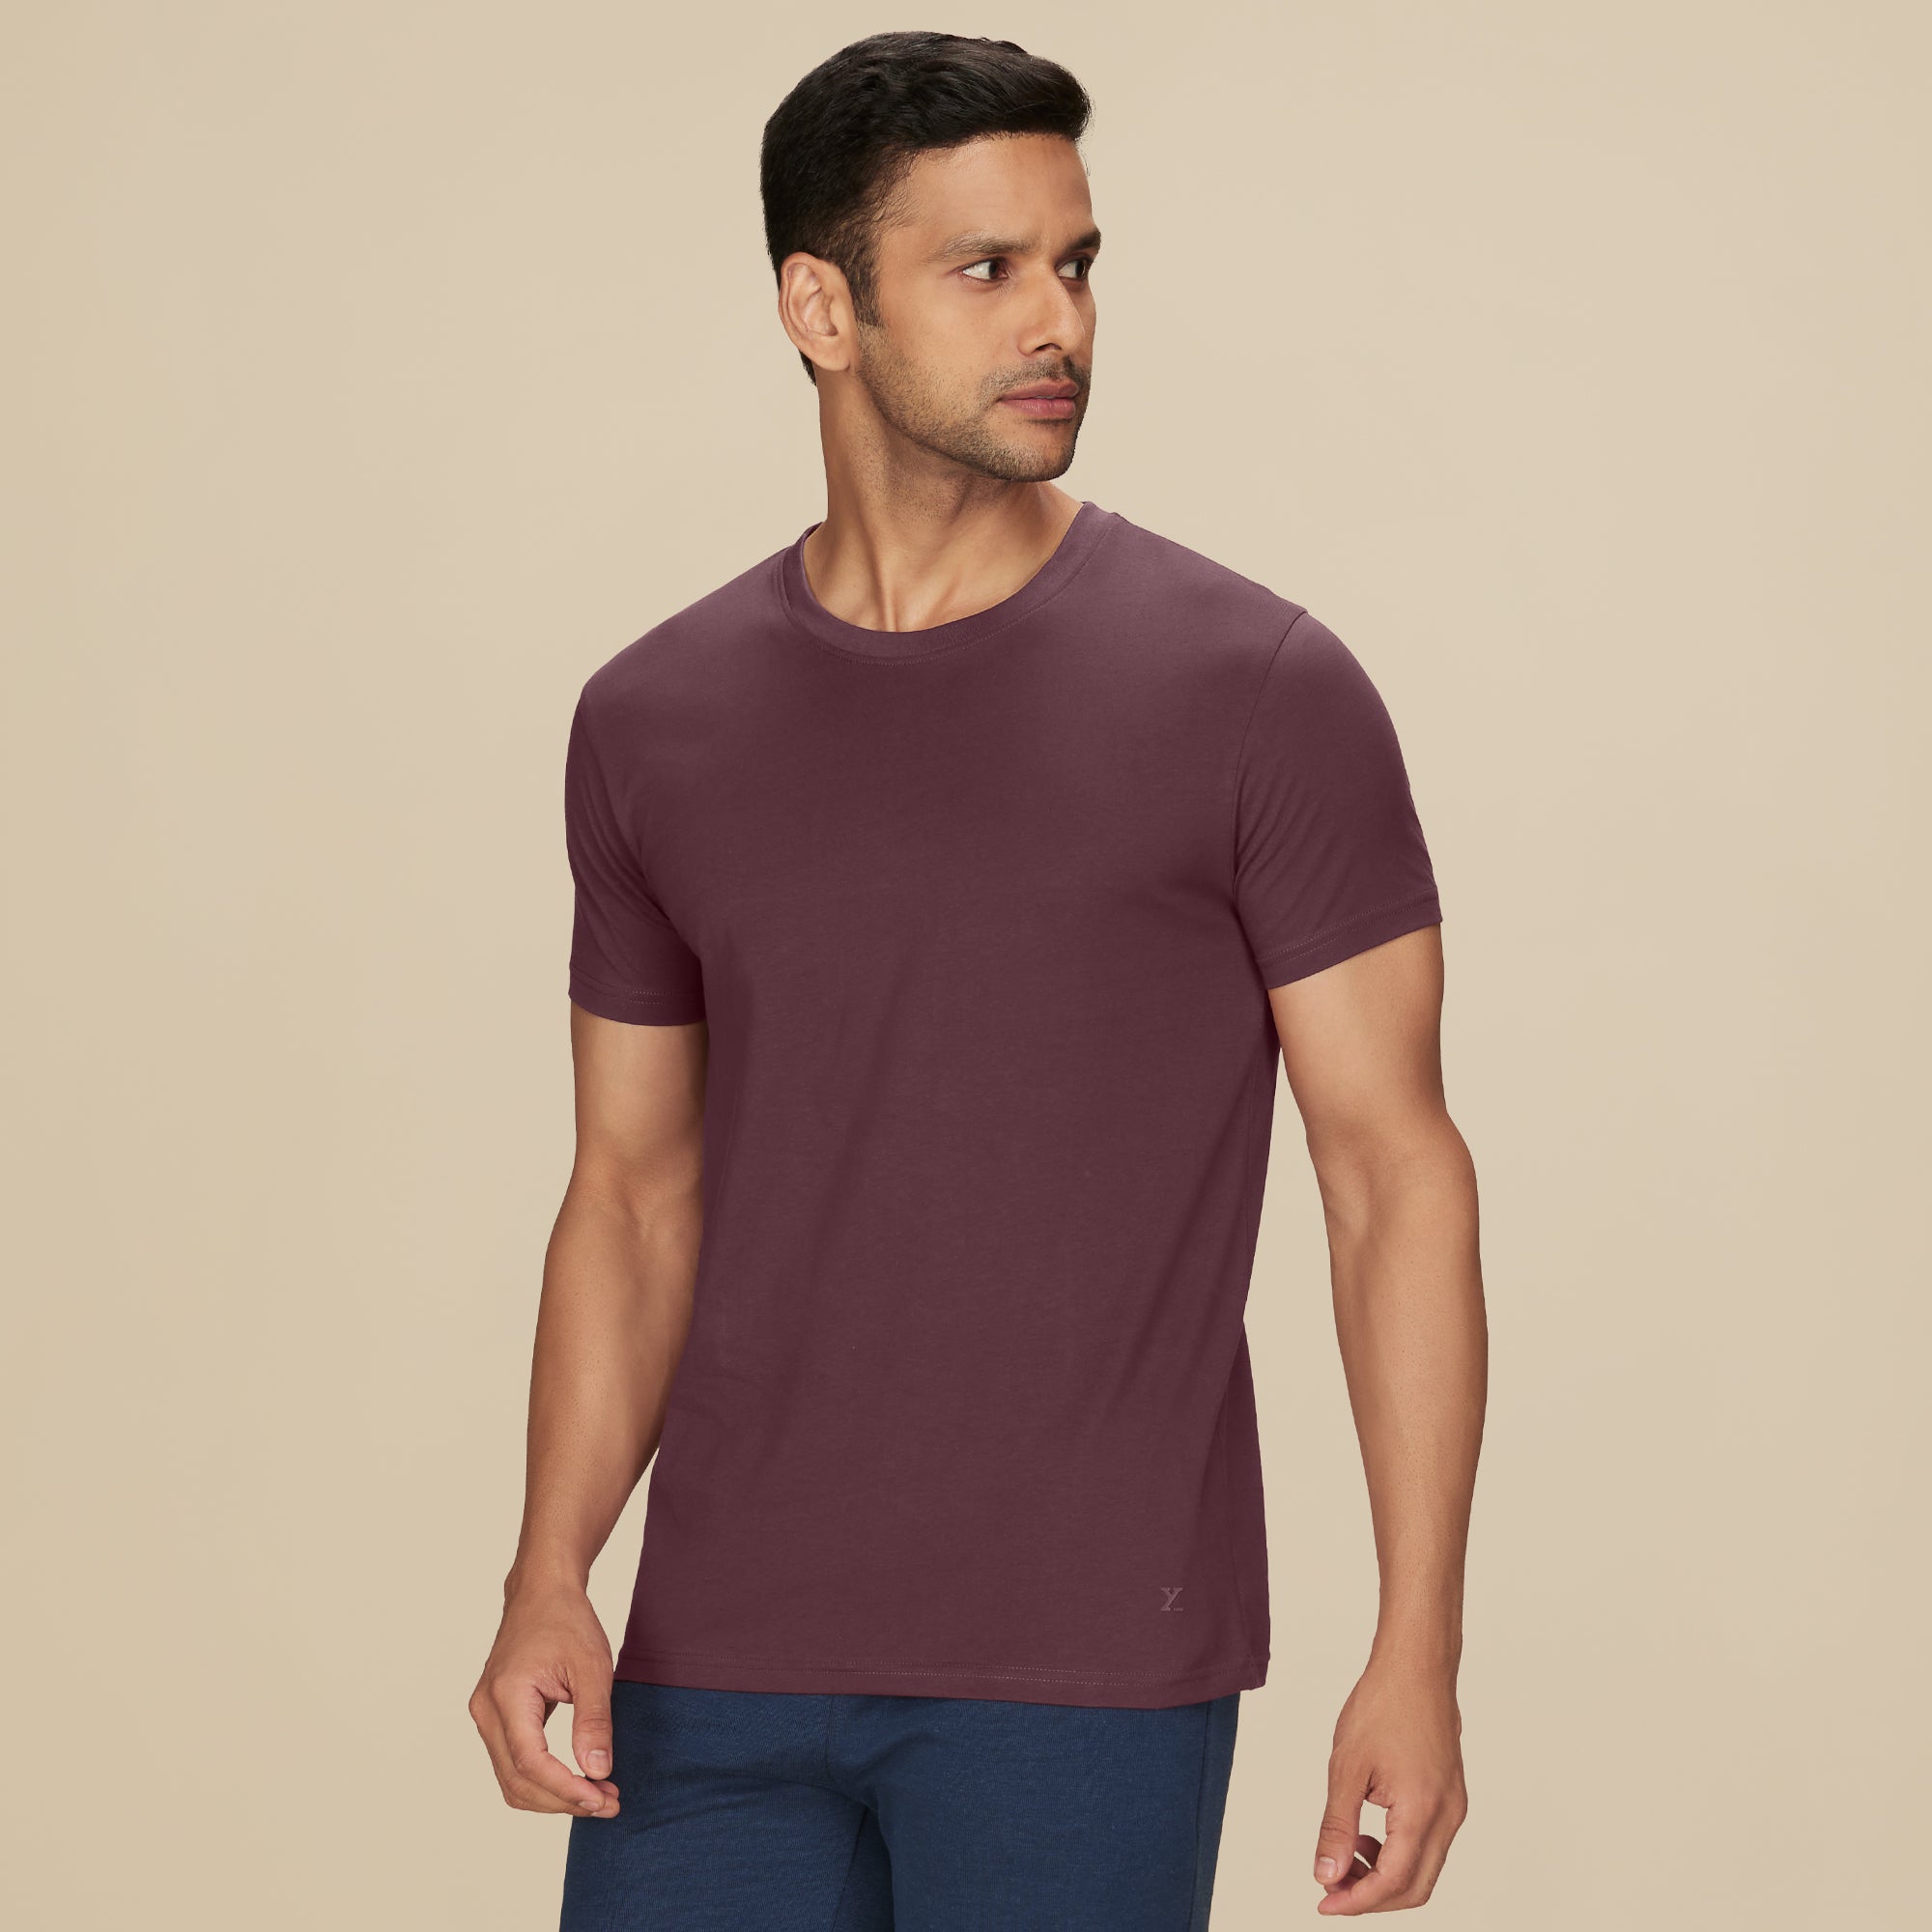 Solid T Shirts For Men   Buy Plain Cotton T Shirt for Men – XYXX